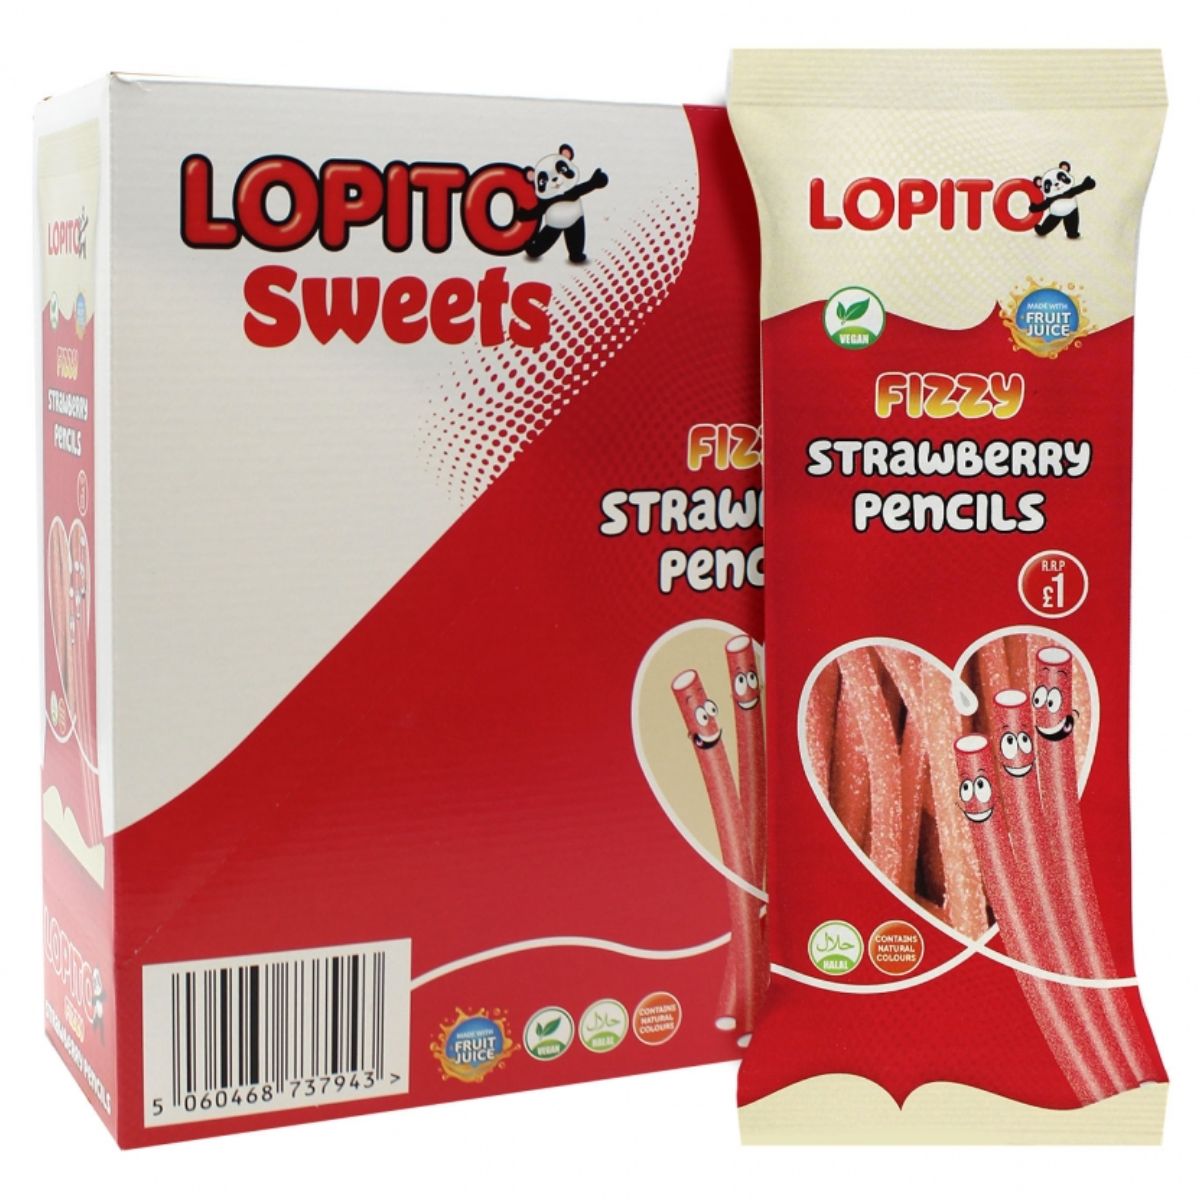 A box of Lopito - Fizzy Strawberry Pencils - 150g.